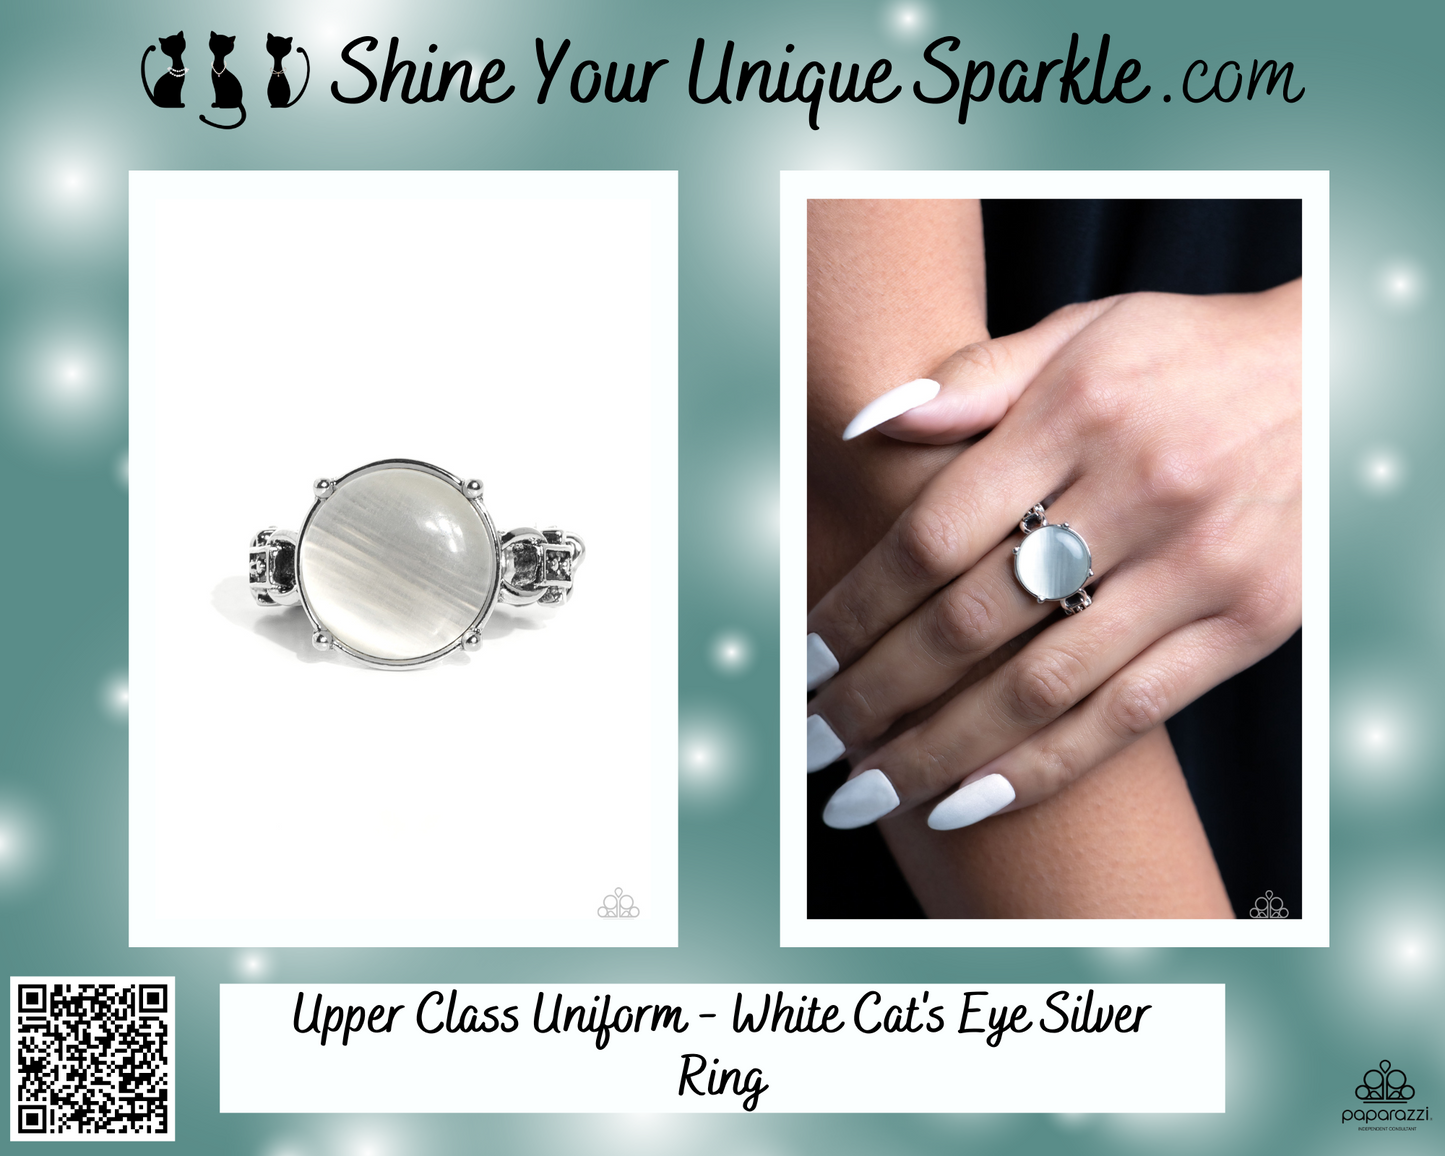 Upper Class Uniform - White Cat's Eye Silver Ring